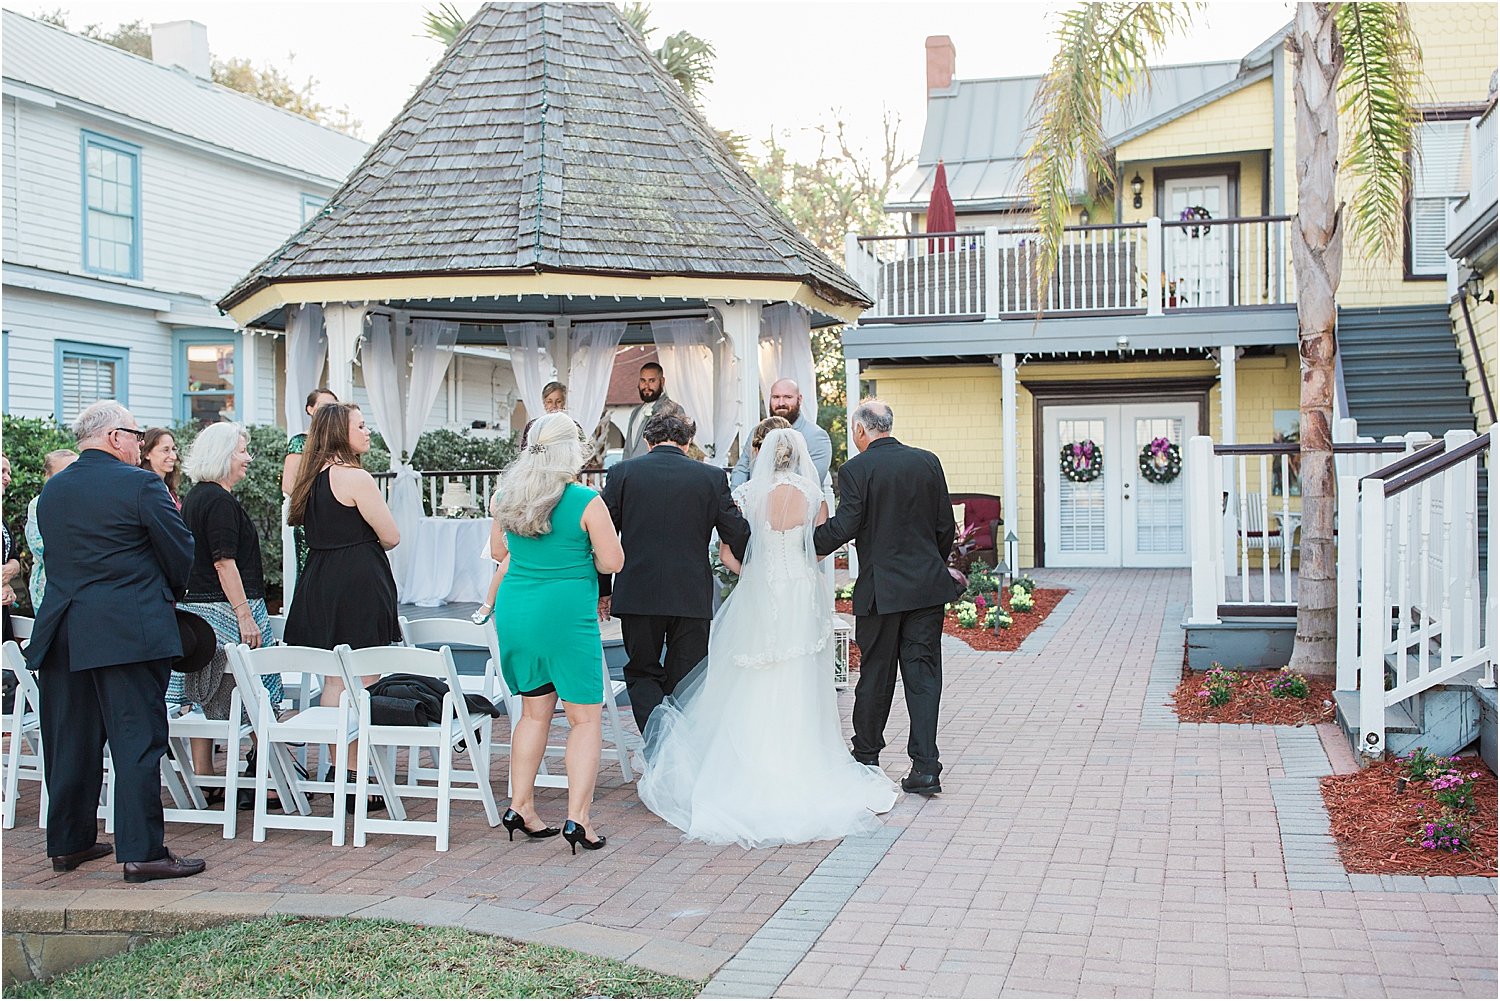 Kasey and Tyler's Wedding at Bayfront Marin St. Augustine, Florida- Jacksonville, Ponte Vedra Beach, St. Augustine, Amelia Island, Florida and Destination Fine Art Film Wedding Photography_0015.jpg